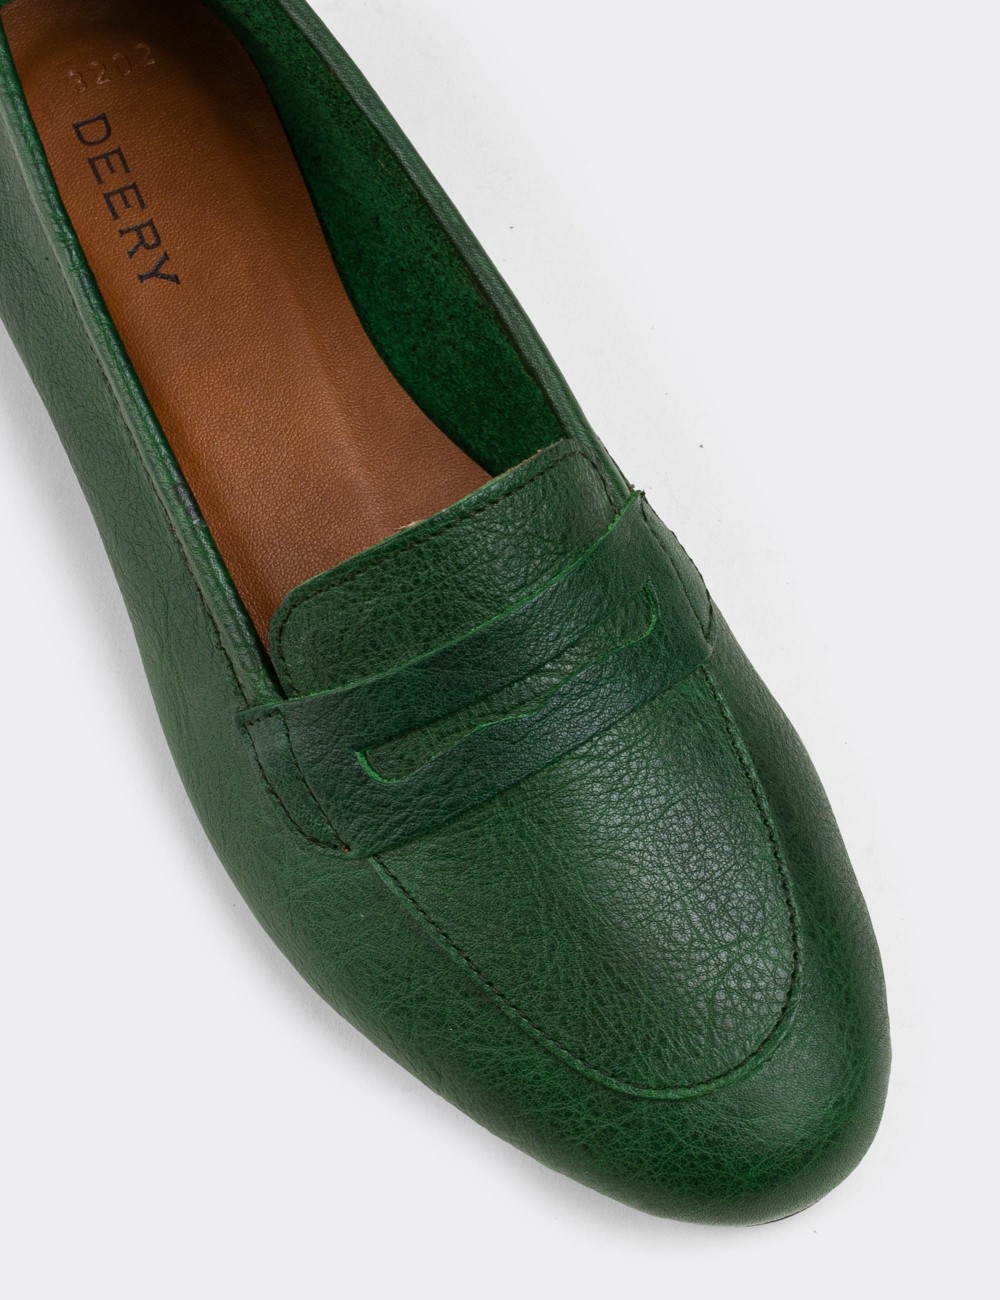 Green  Leather Vintage Loafers  - E3202ZYSLC06